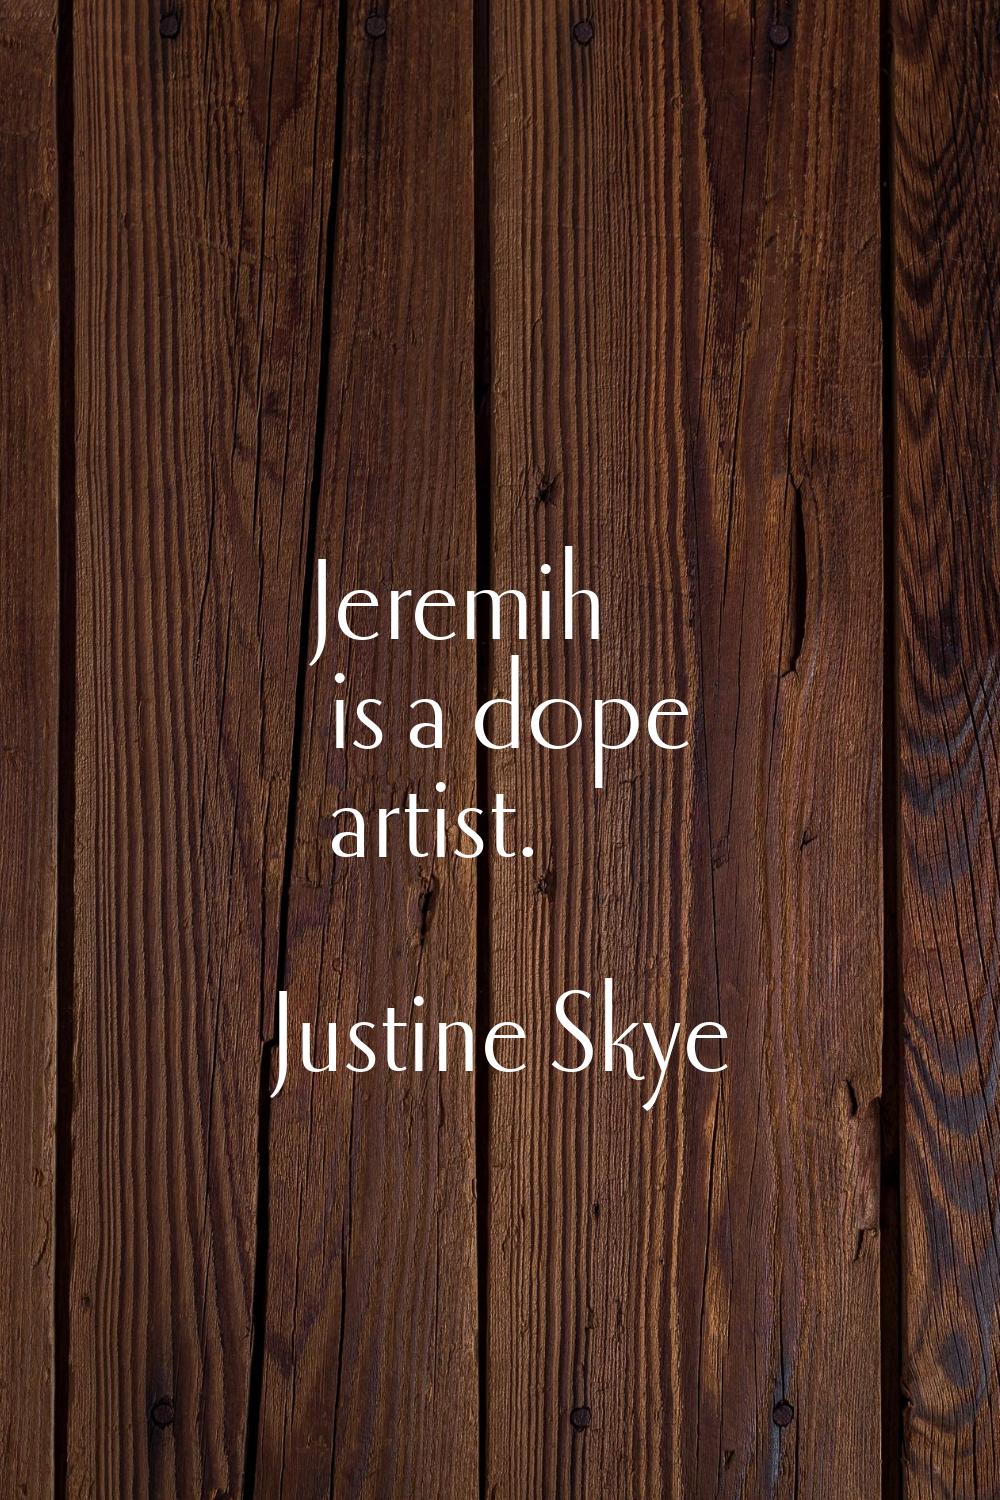 Jeremih is a dope artist.